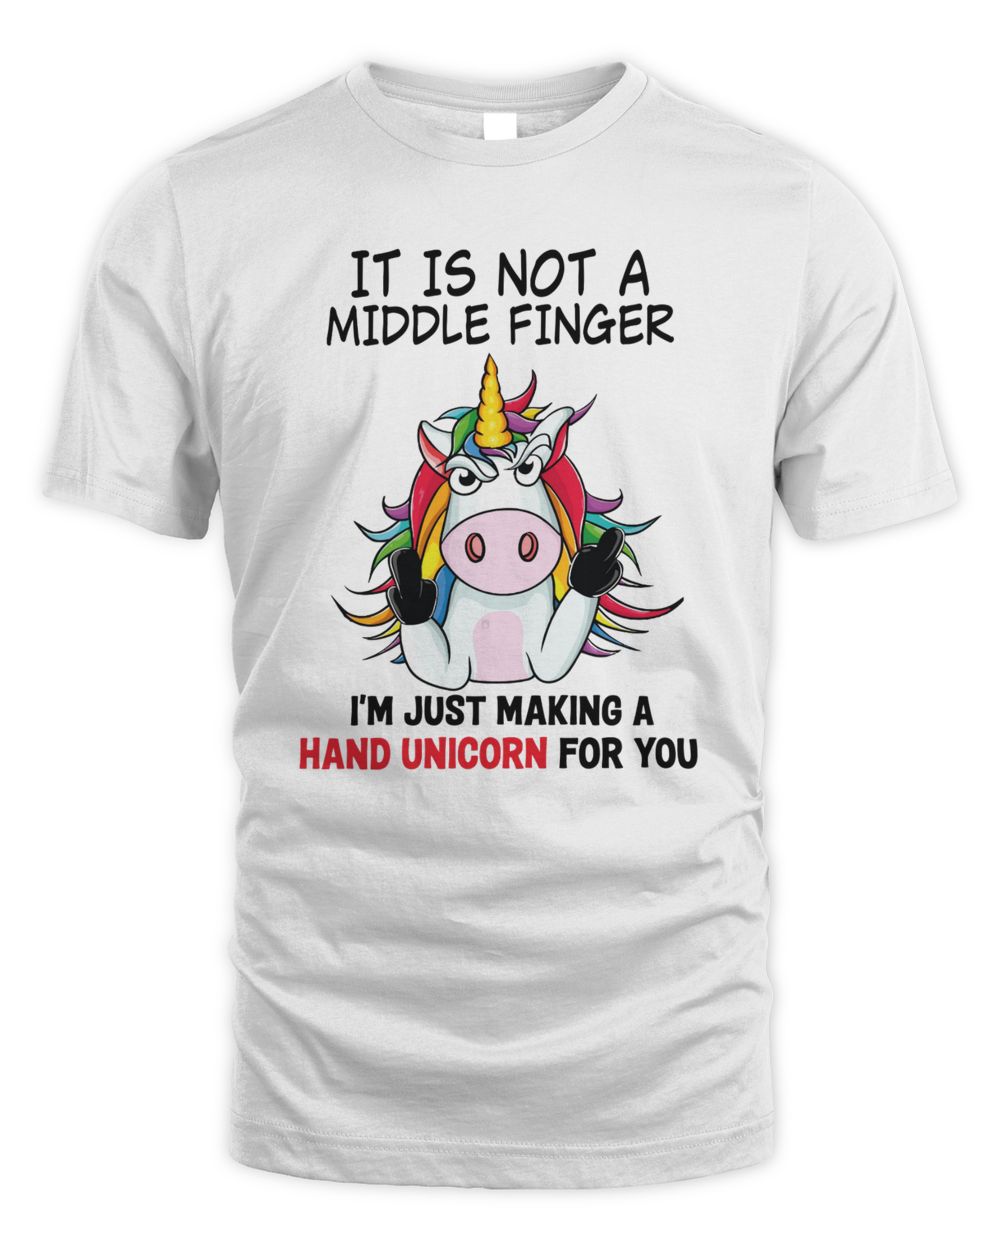 It's not a middle finger Unisex Standard T-Shirt white 